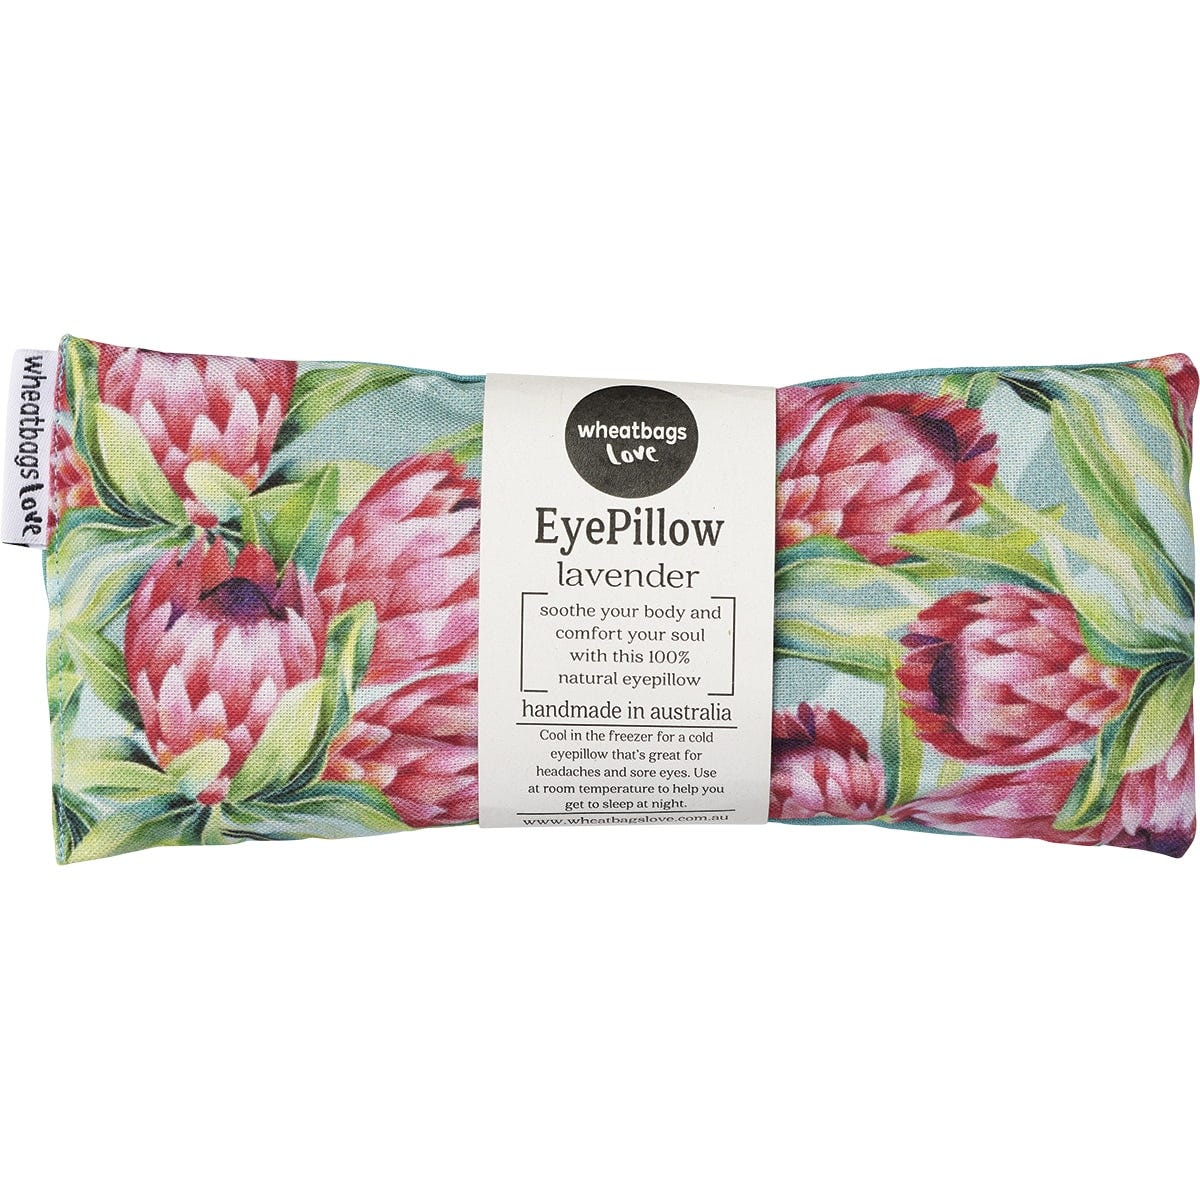 Wheatbags Love Eyepillow Protea Lavender Scented